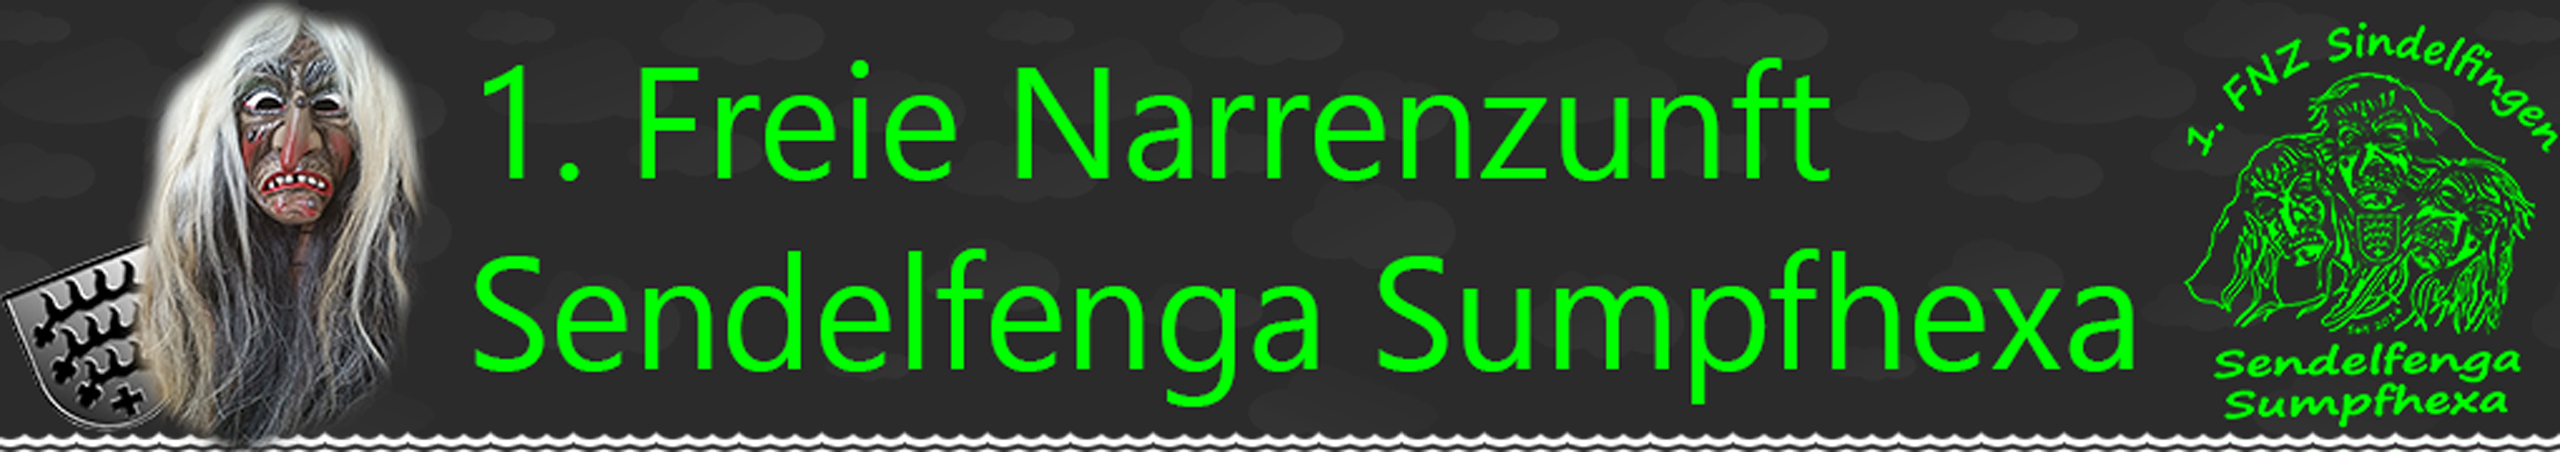 Sendelfenga-Sumpfhexa banner